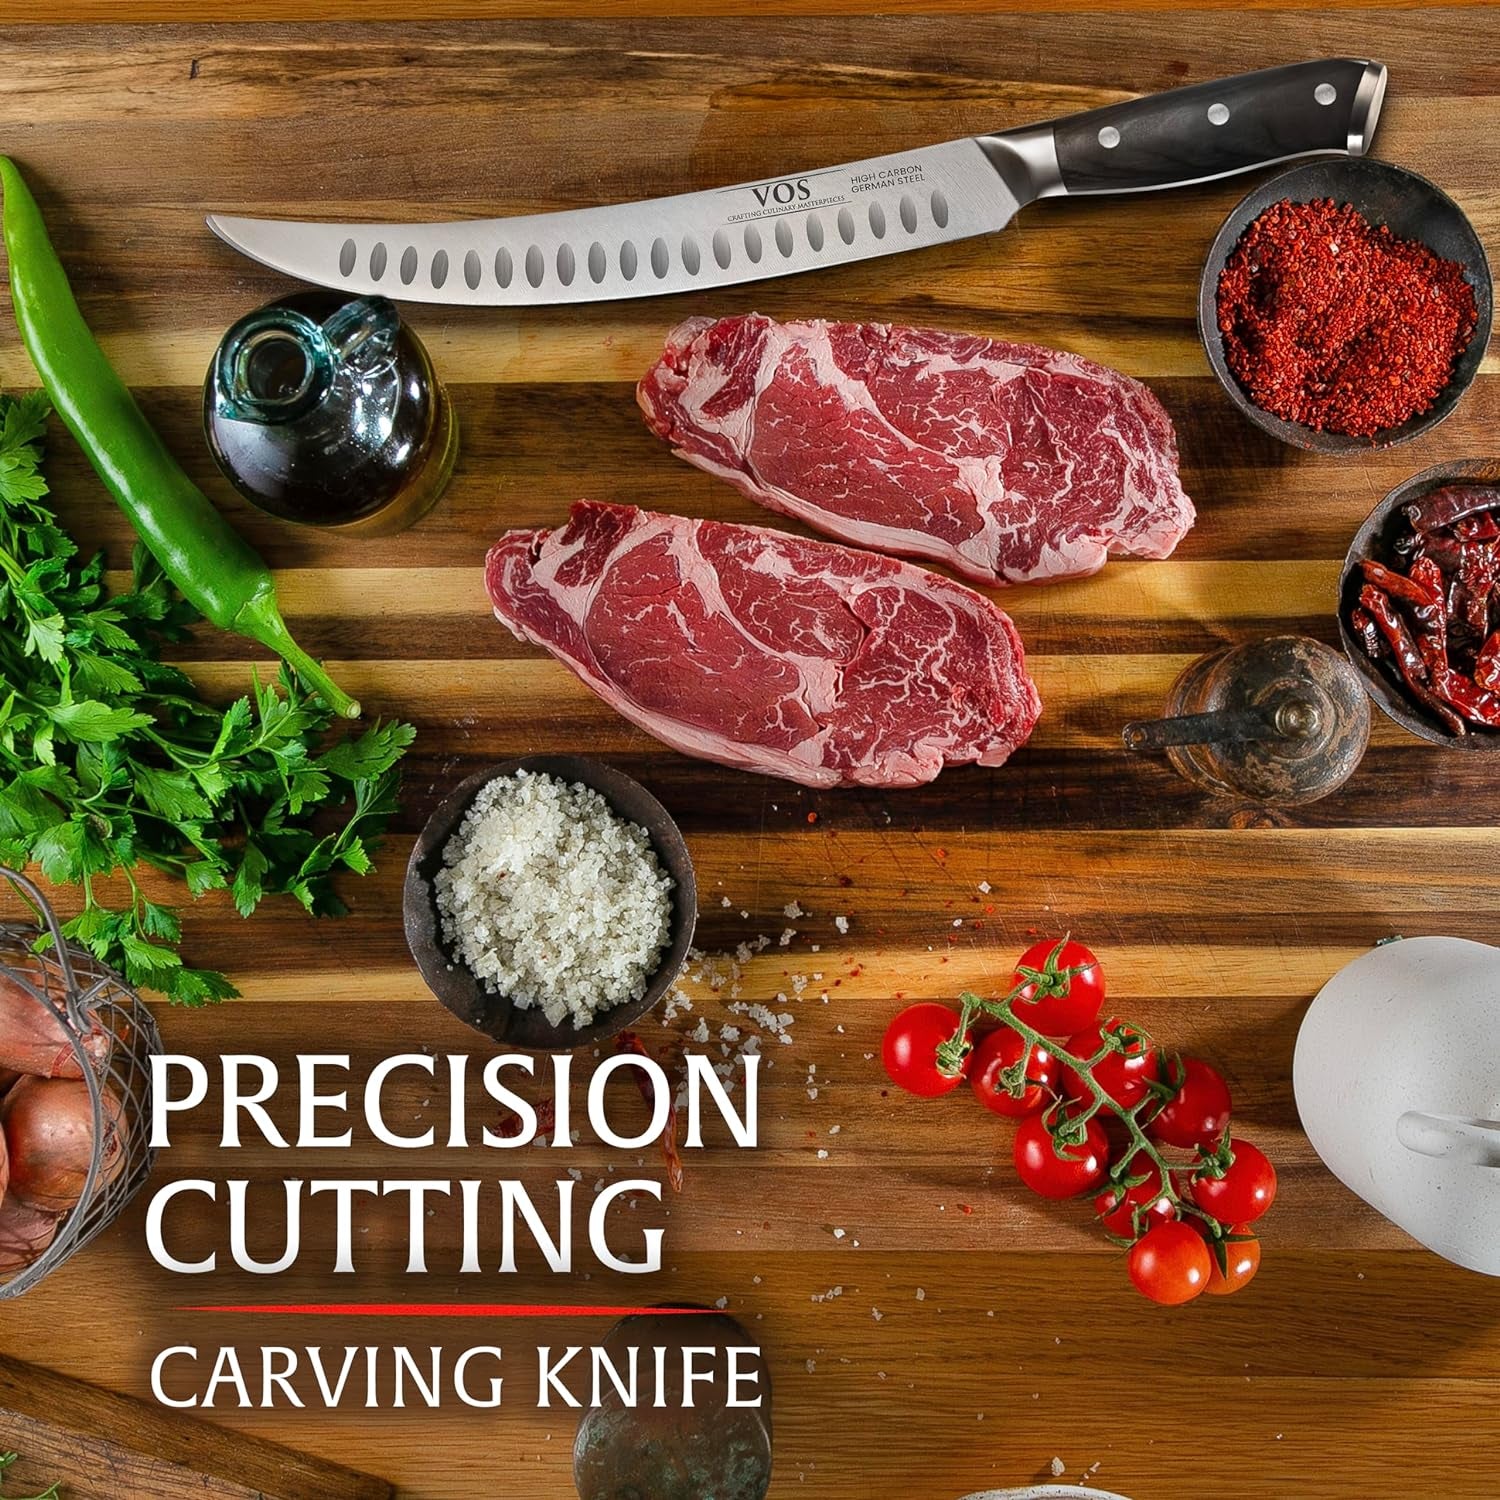 10" Carving Knife Brisket Knife Butcher Knife Slicing Knife - Razor Sharp Kitchen Knife - Premium German Steel - Meat Cutting Knife - BBQ Knife - Ergonomic Handle with a Gift Box